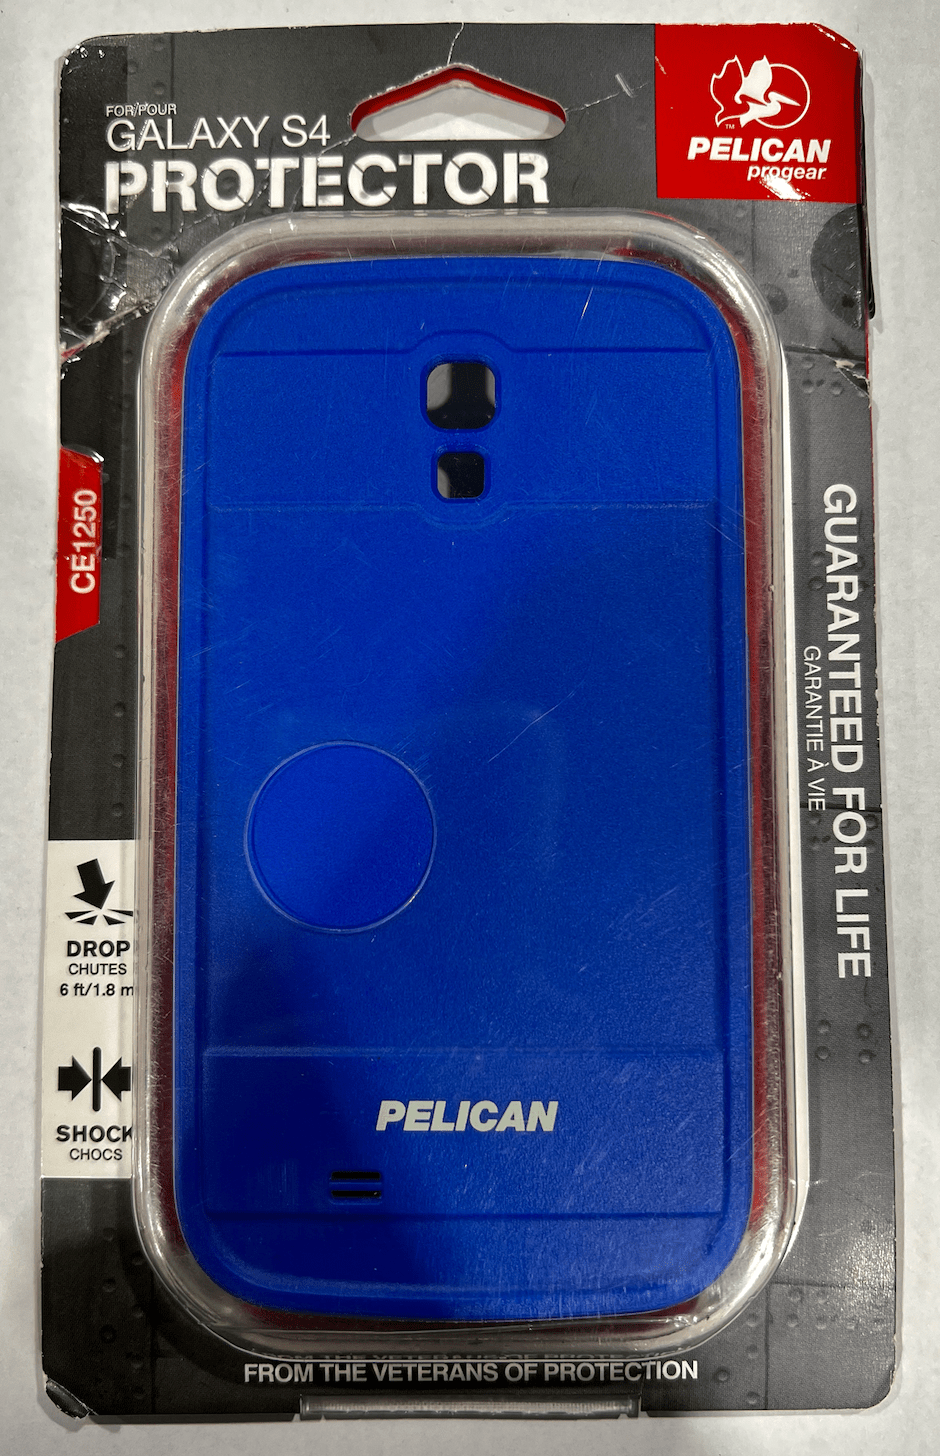 Galaxy S4 Protector CE1250